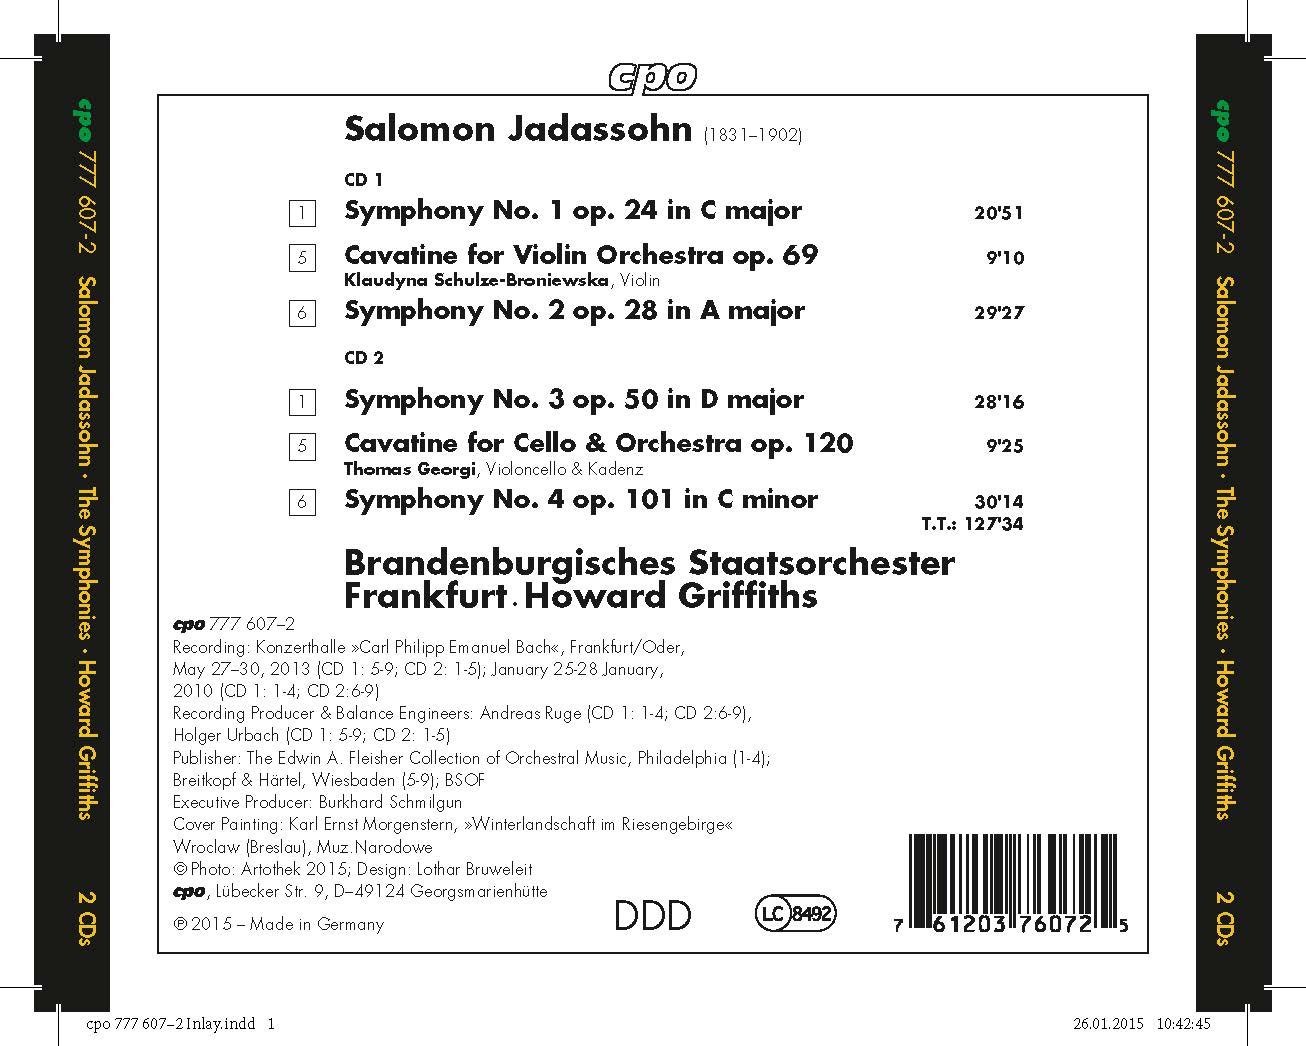 Salomon Jadassohn (1831-1902): Symphonies Nos. 1-4 / Brandenburg State Orchestra, Frankfurt; Griffiths back cover